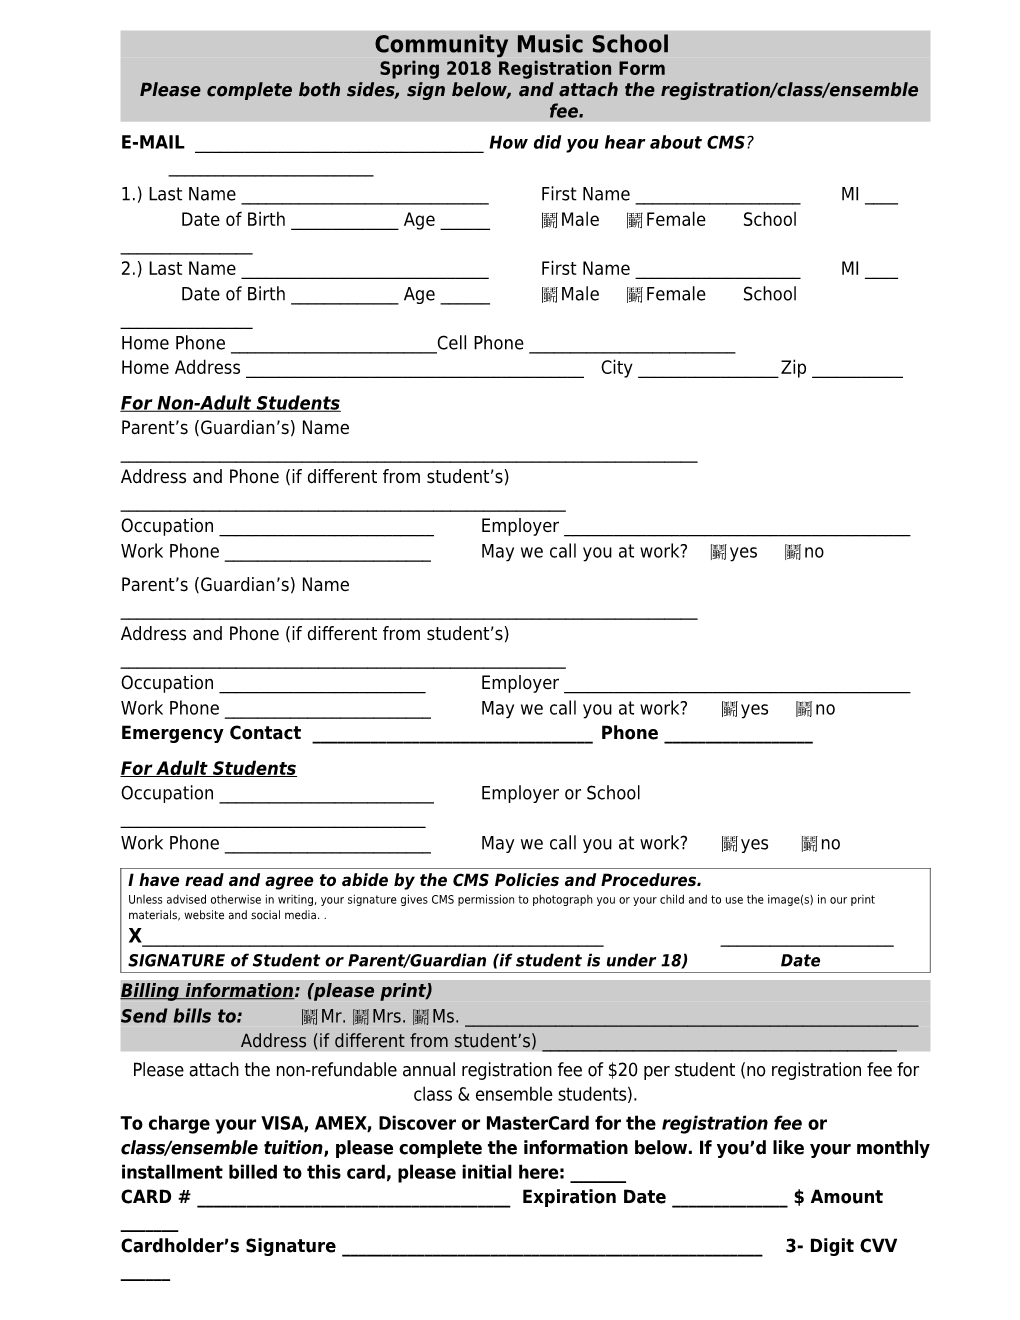 Community Music School Registration Form